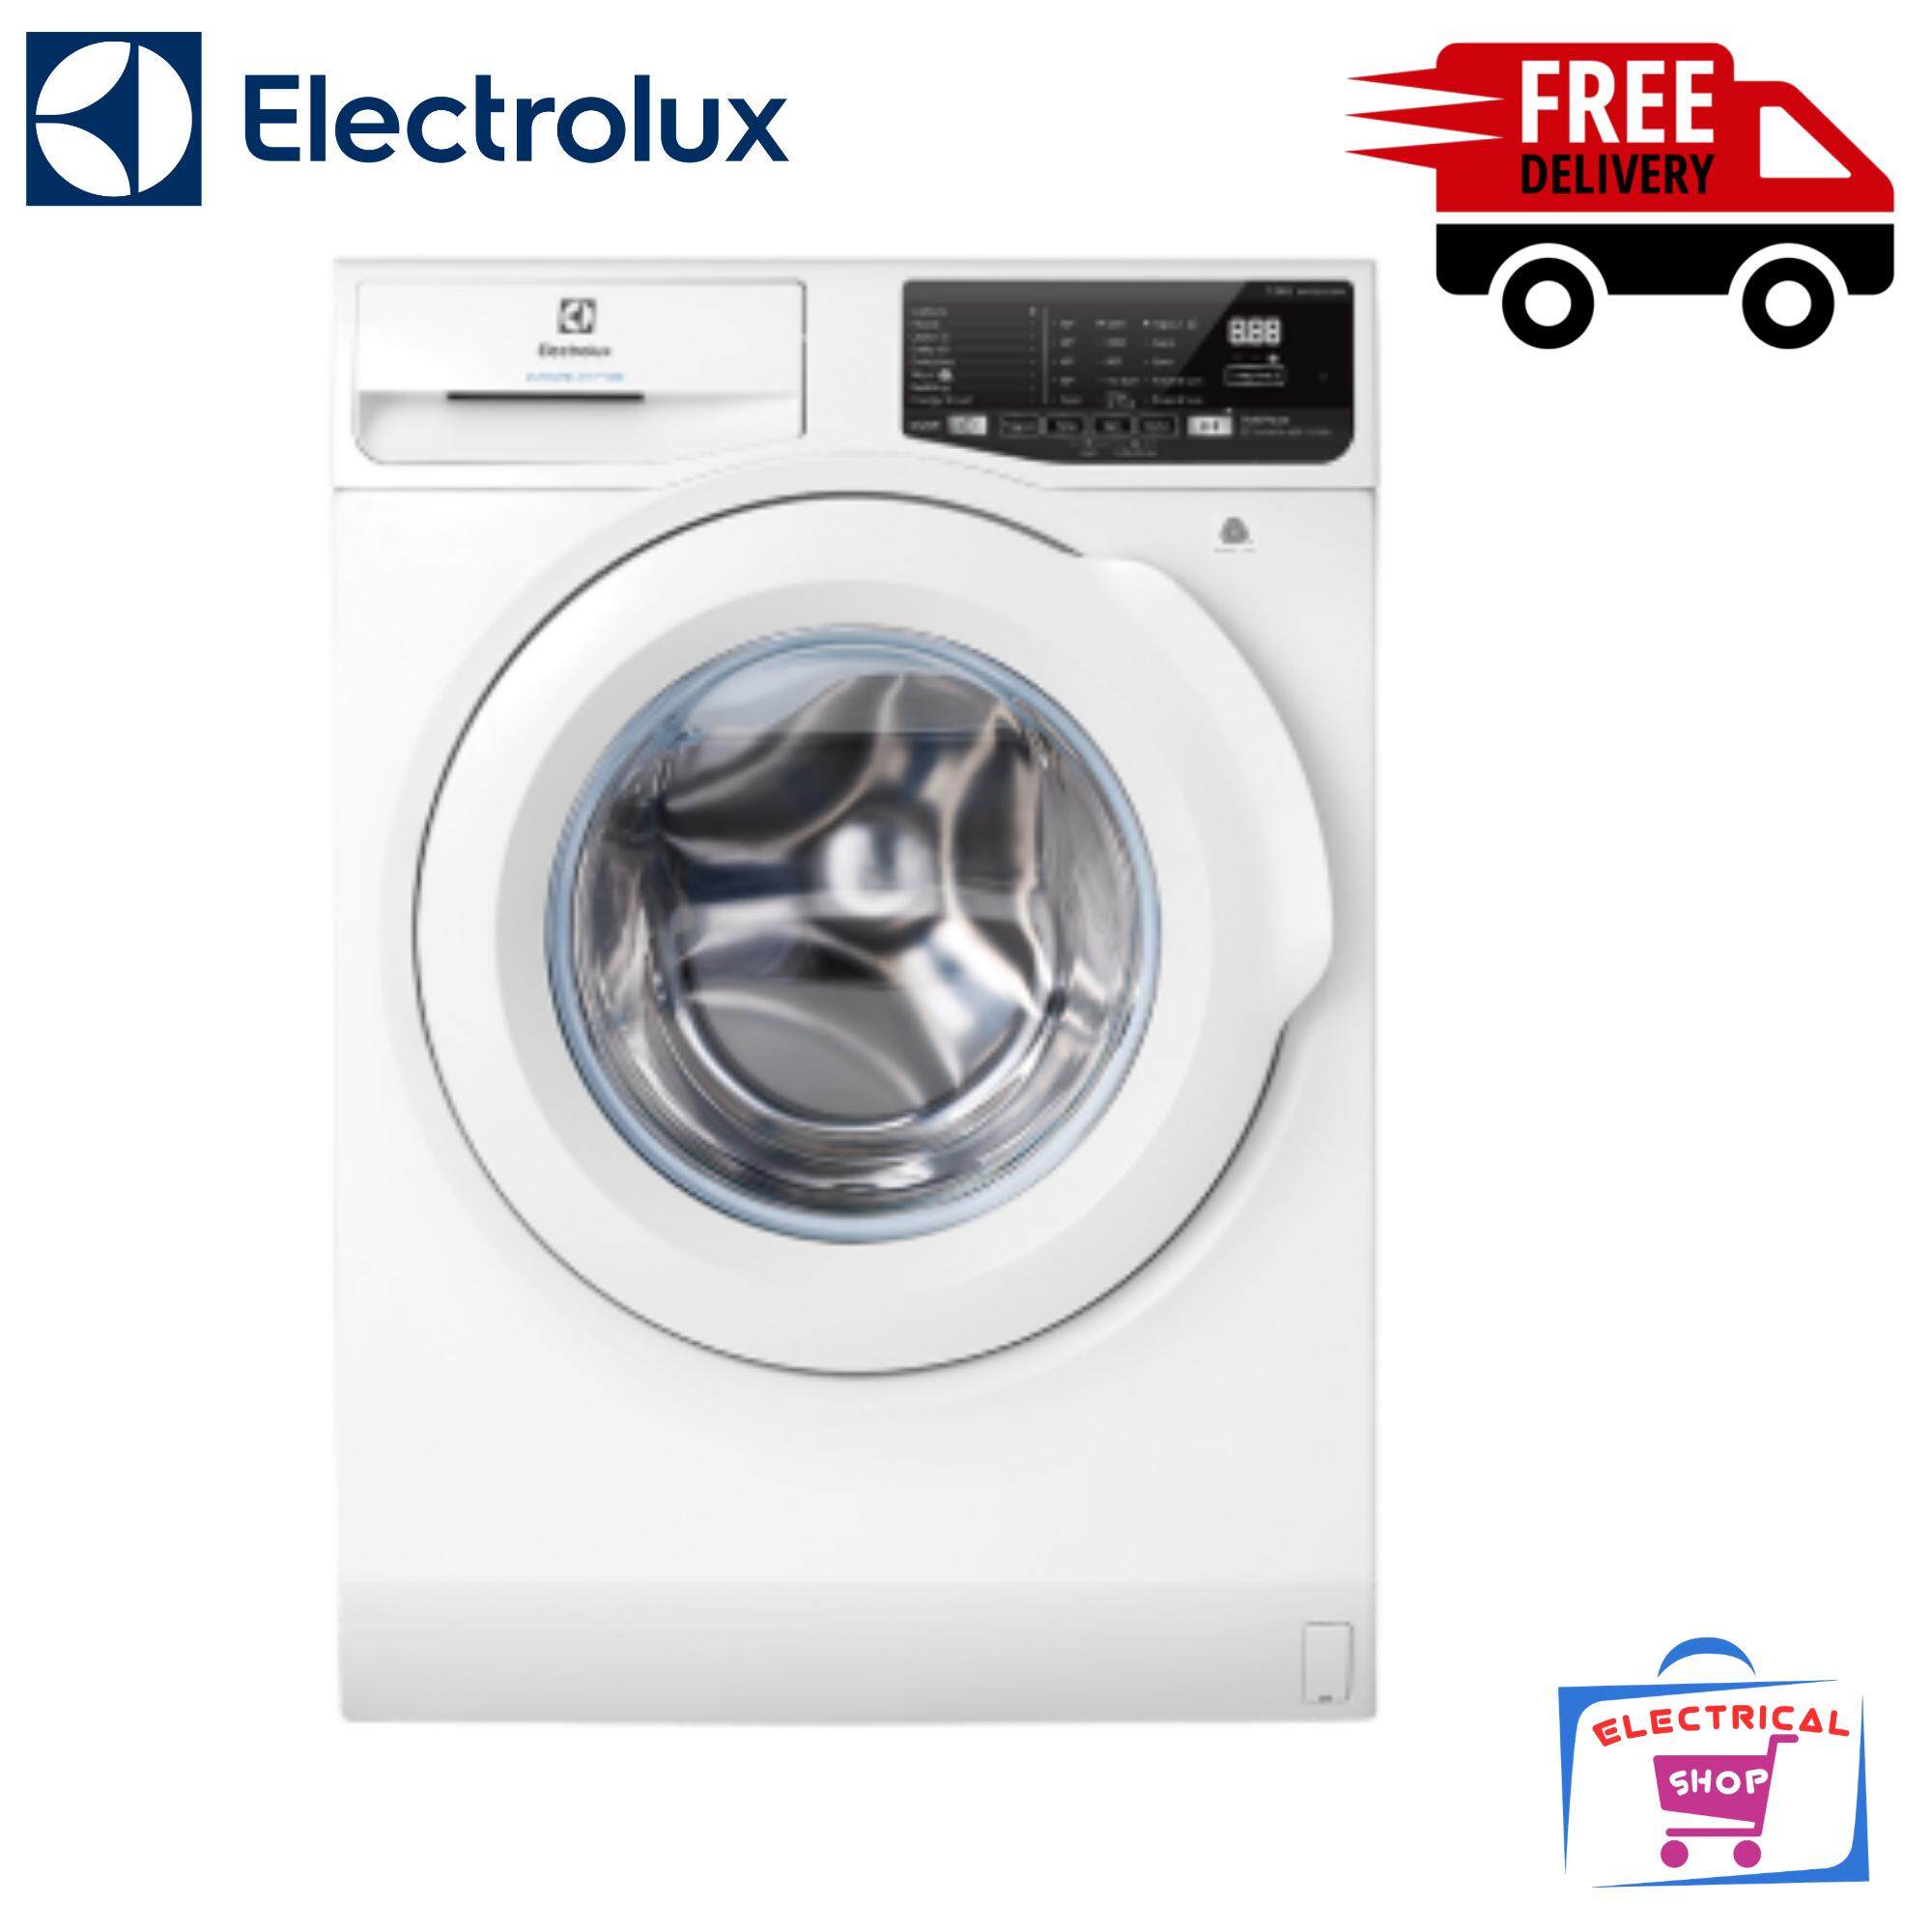 electrolux 7.5kg front loading washing machine manual